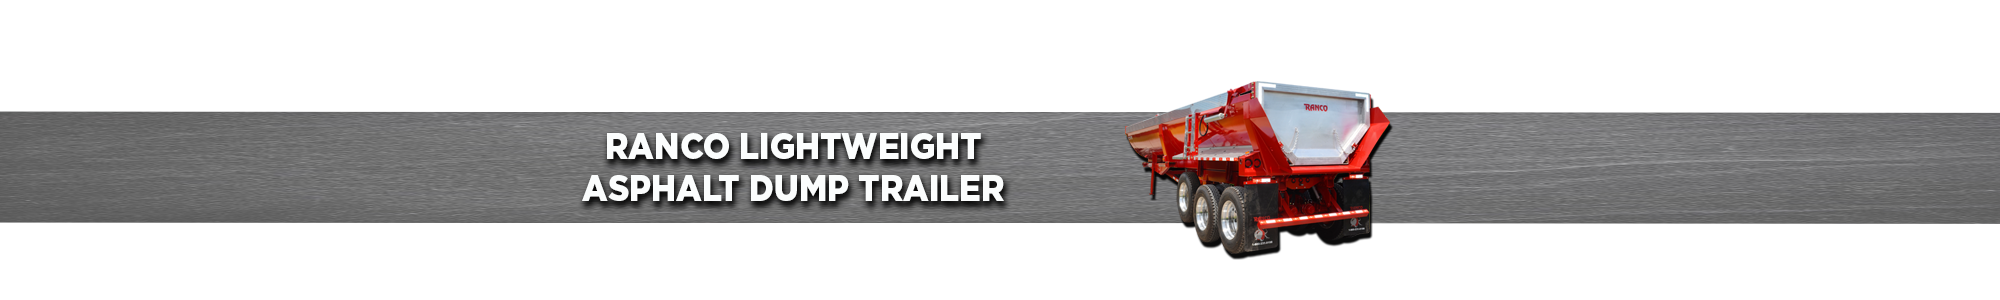 RANCO Lightweight Asphalt Trailer